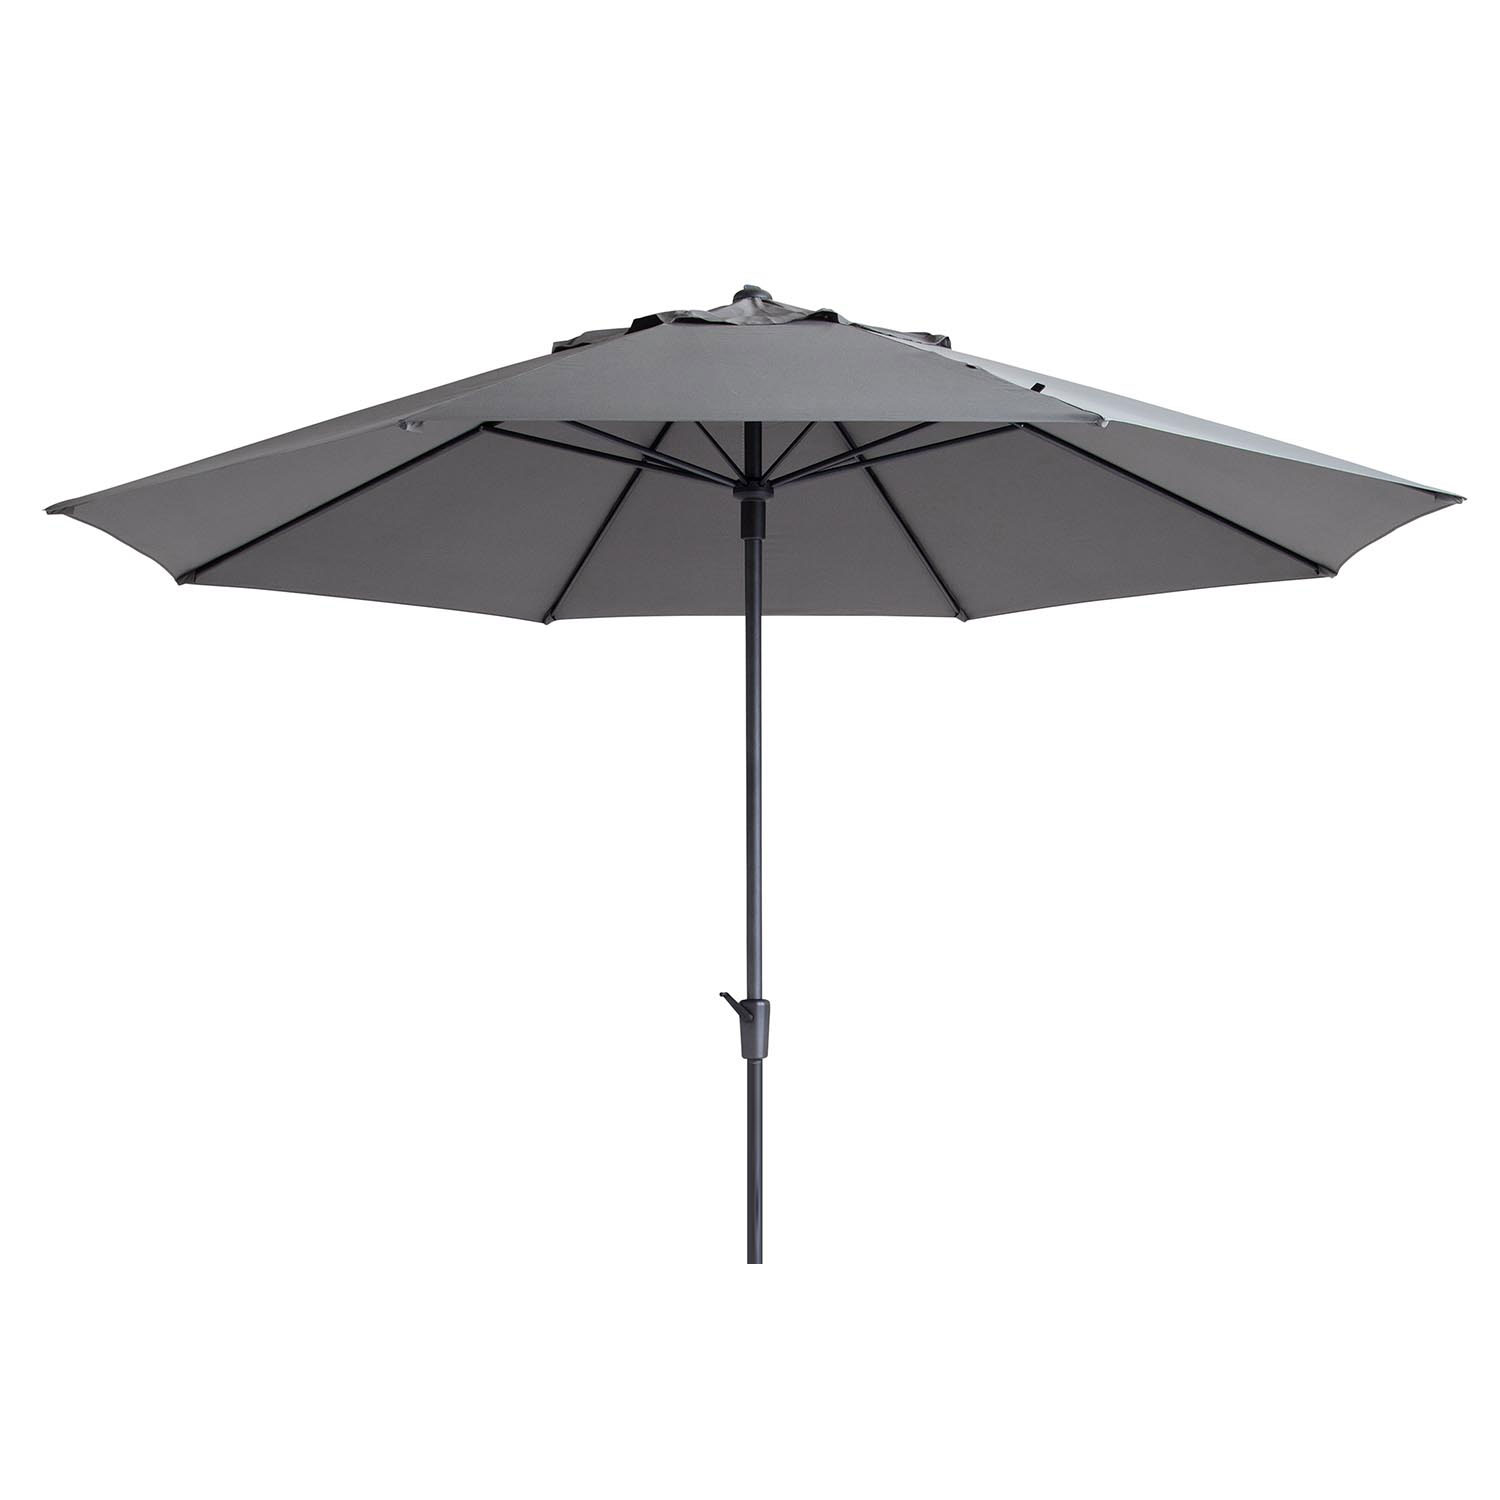 Parasol Timor 400cm (Light grey)